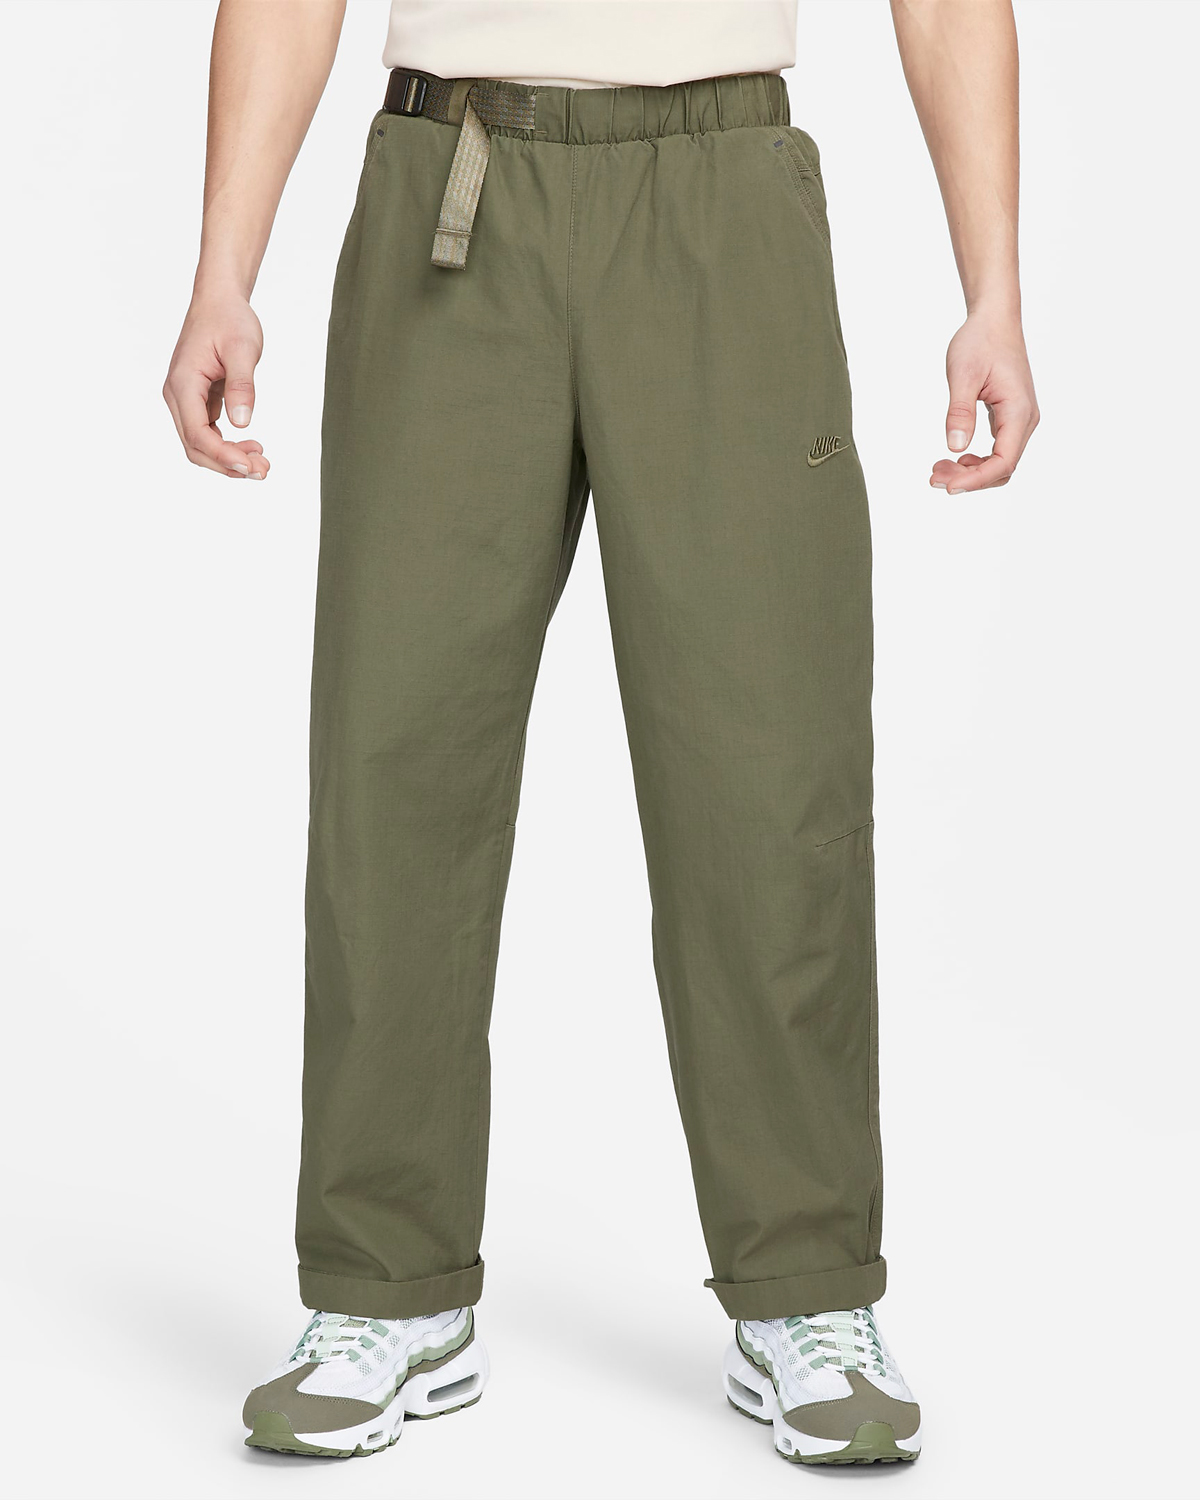 Nike-Sportswear-Tech-Pack-Woven-Pants-Medium-Olive